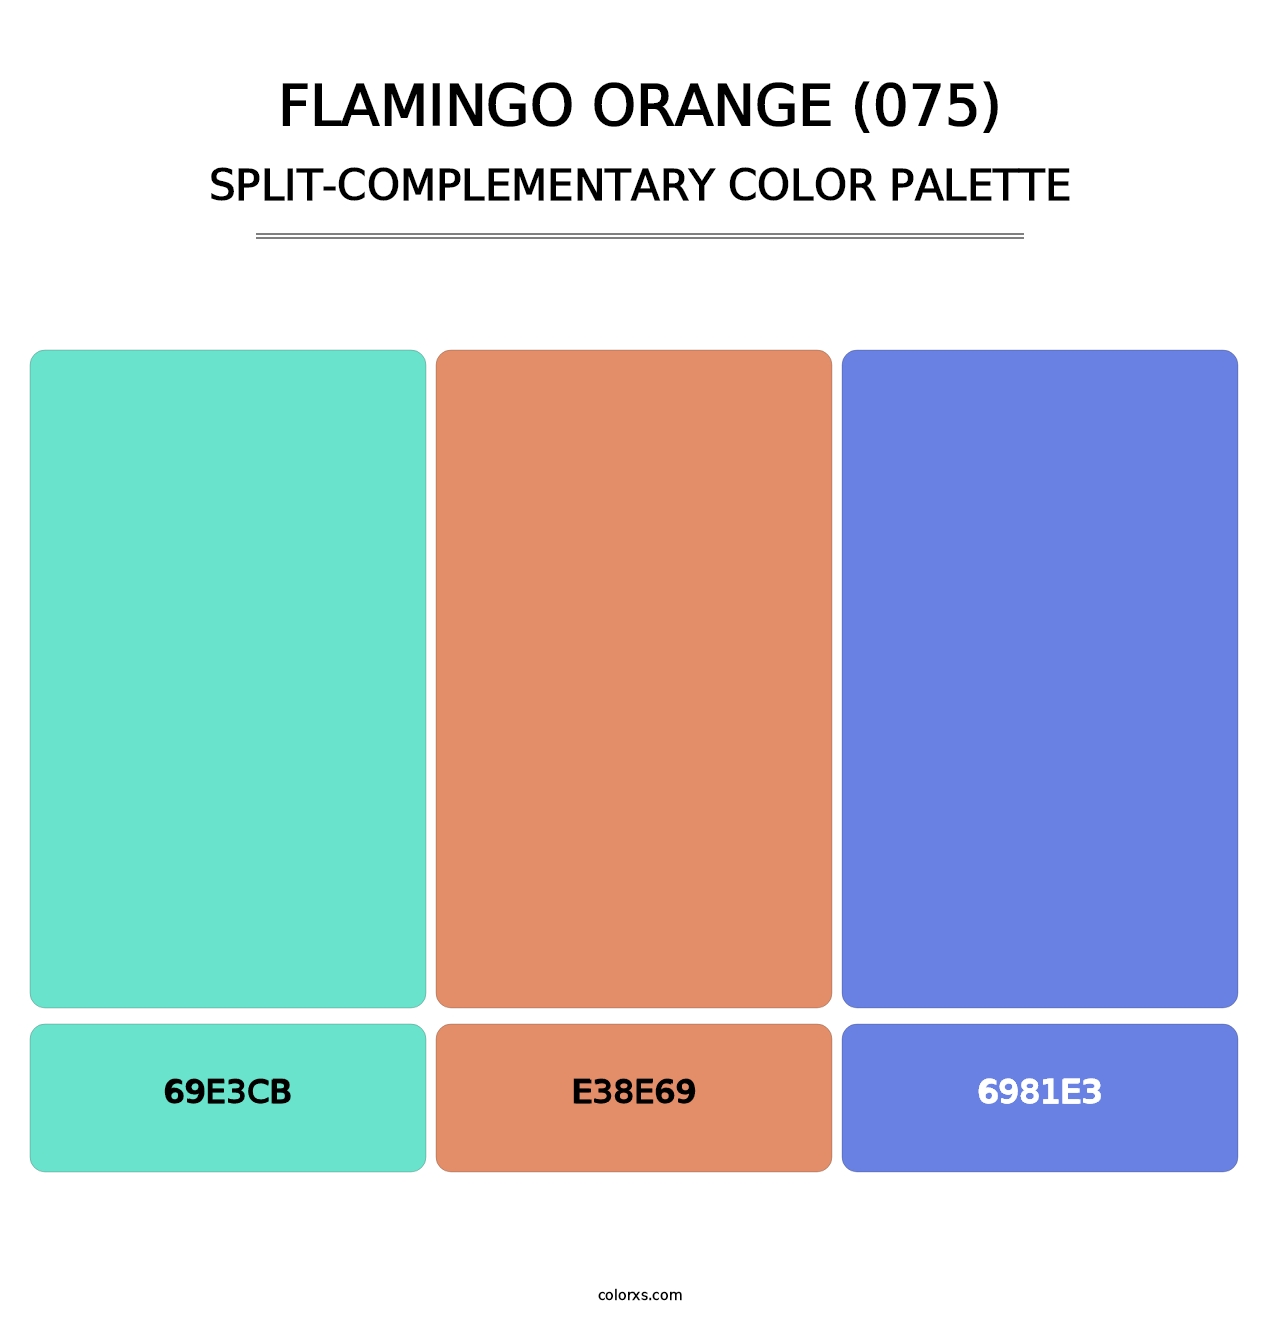 Flamingo Orange (075) - Split-Complementary Color Palette